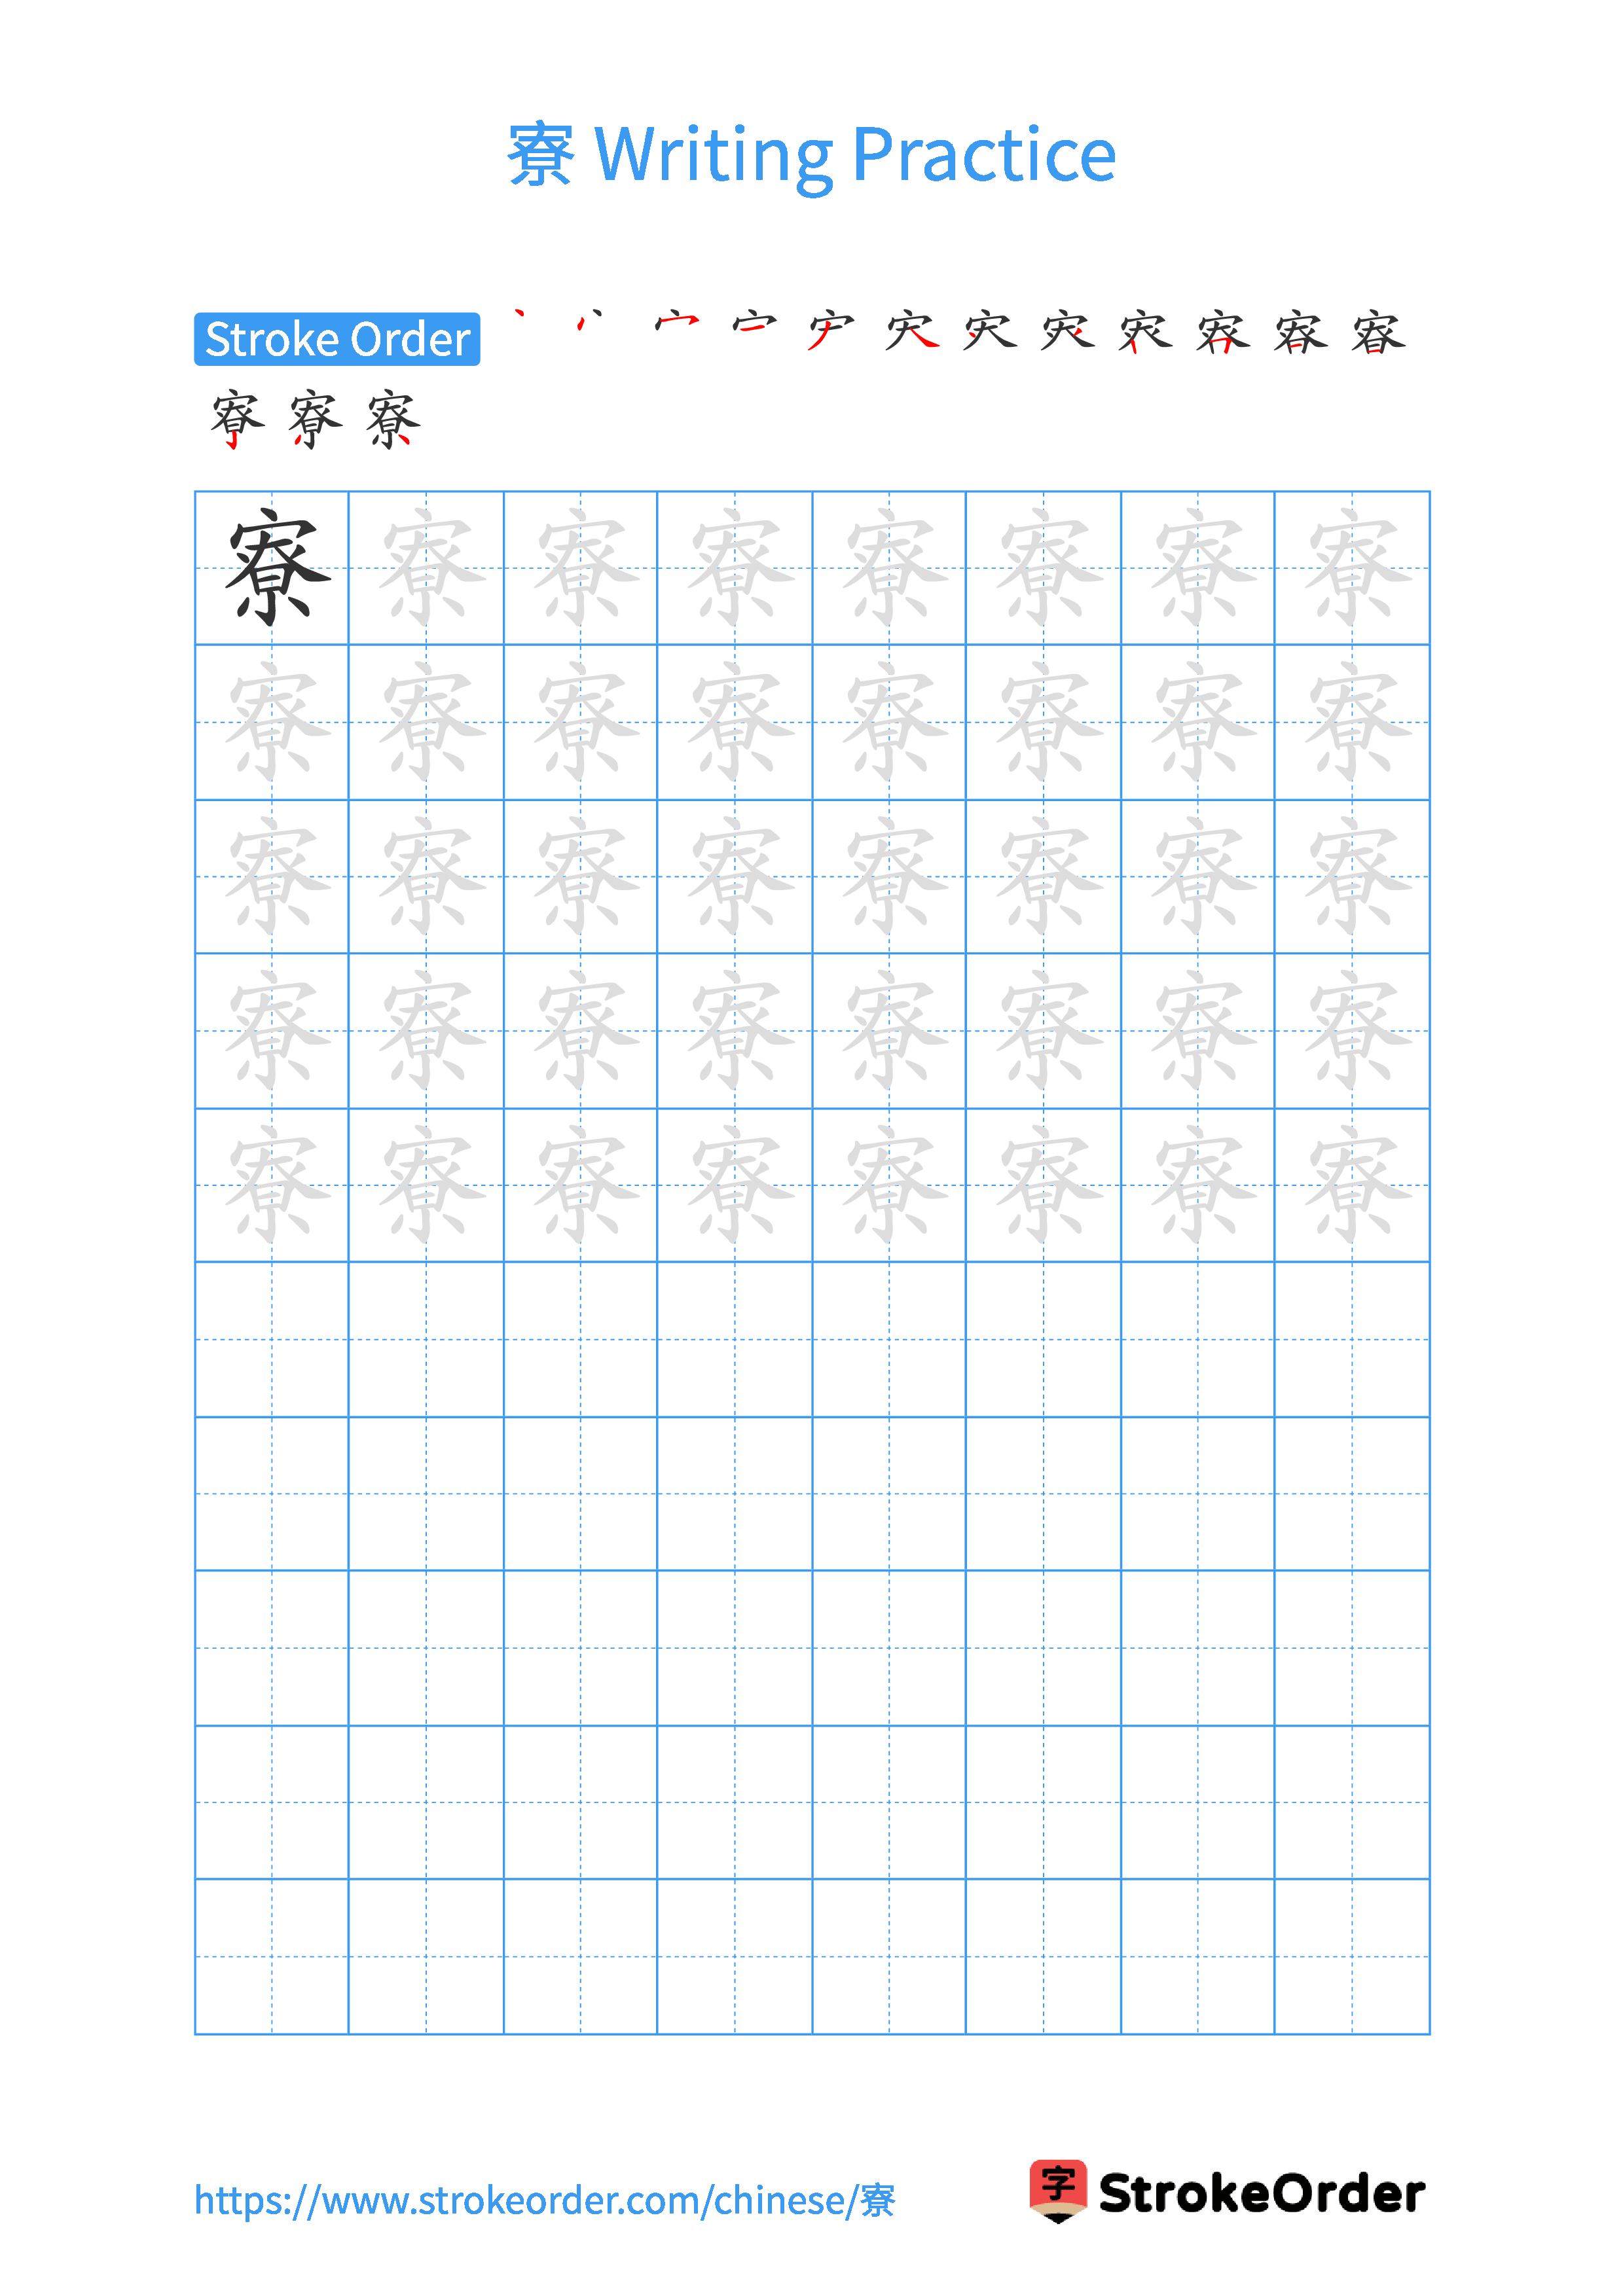 Printable Handwriting Practice Worksheet of the Chinese character 寮 in Portrait Orientation (Tian Zi Ge)